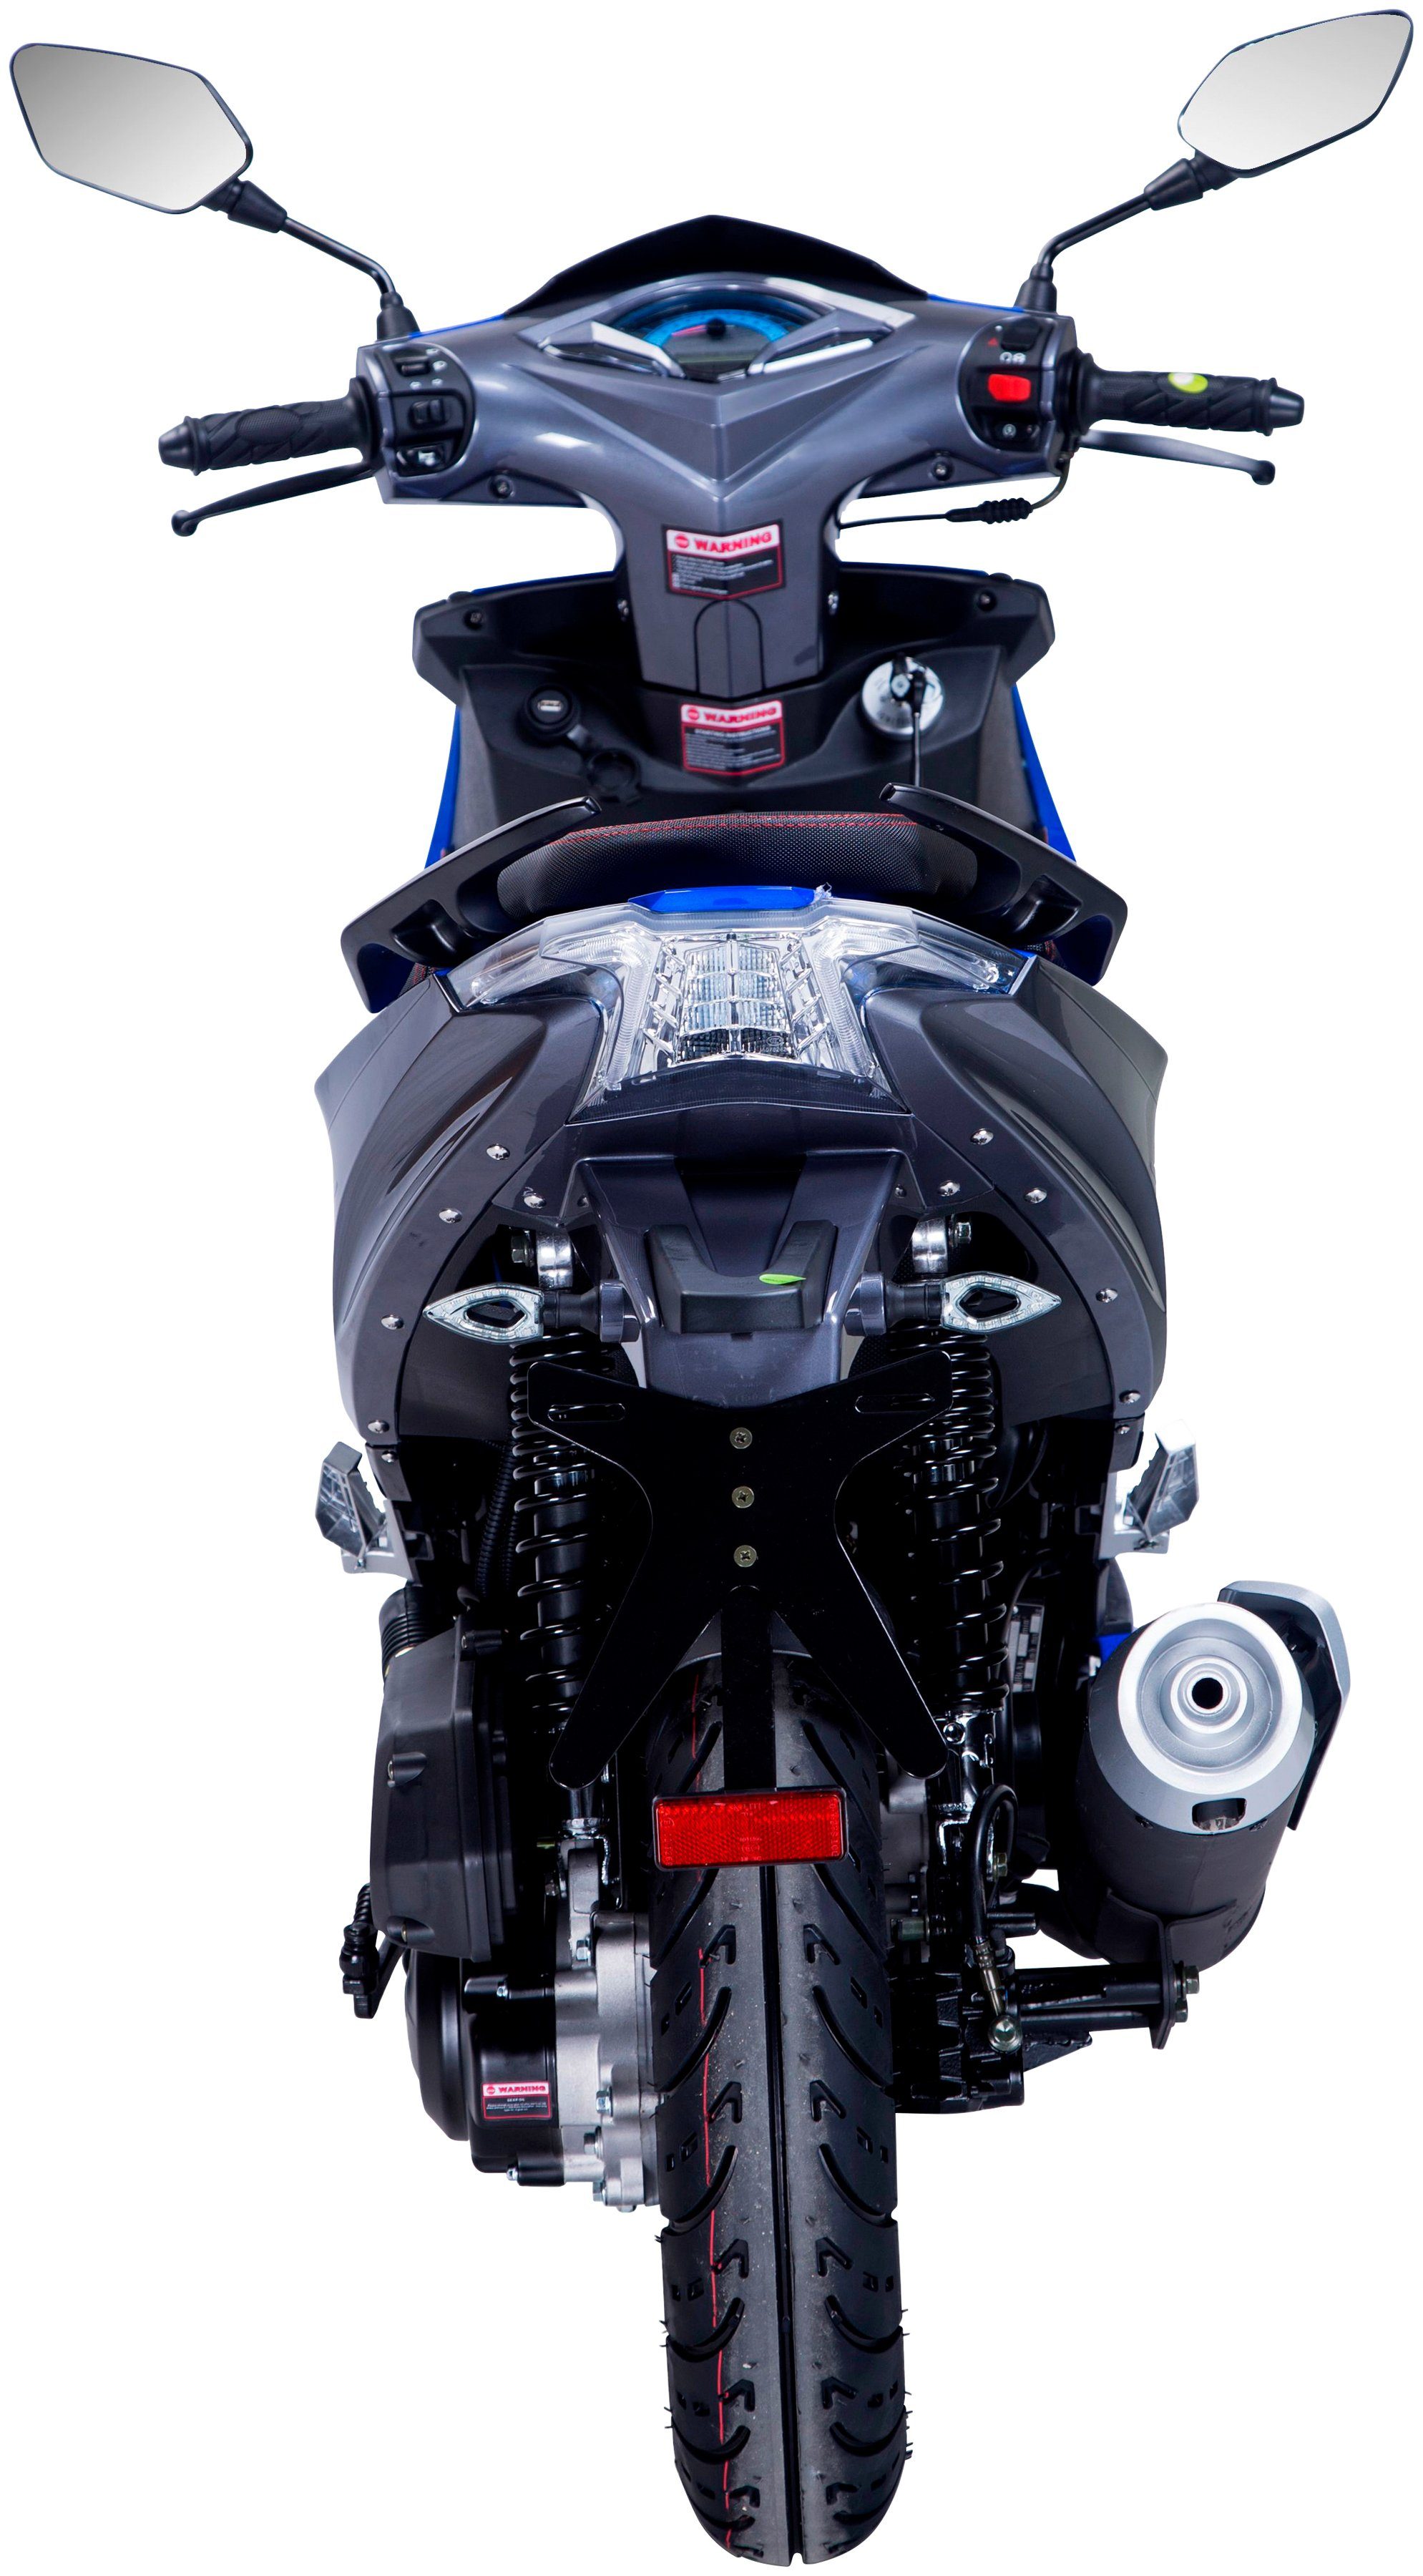 GT UNION Motorroller Striker, 50 Euro 5 schwarz/blau ccm, 45 km/h